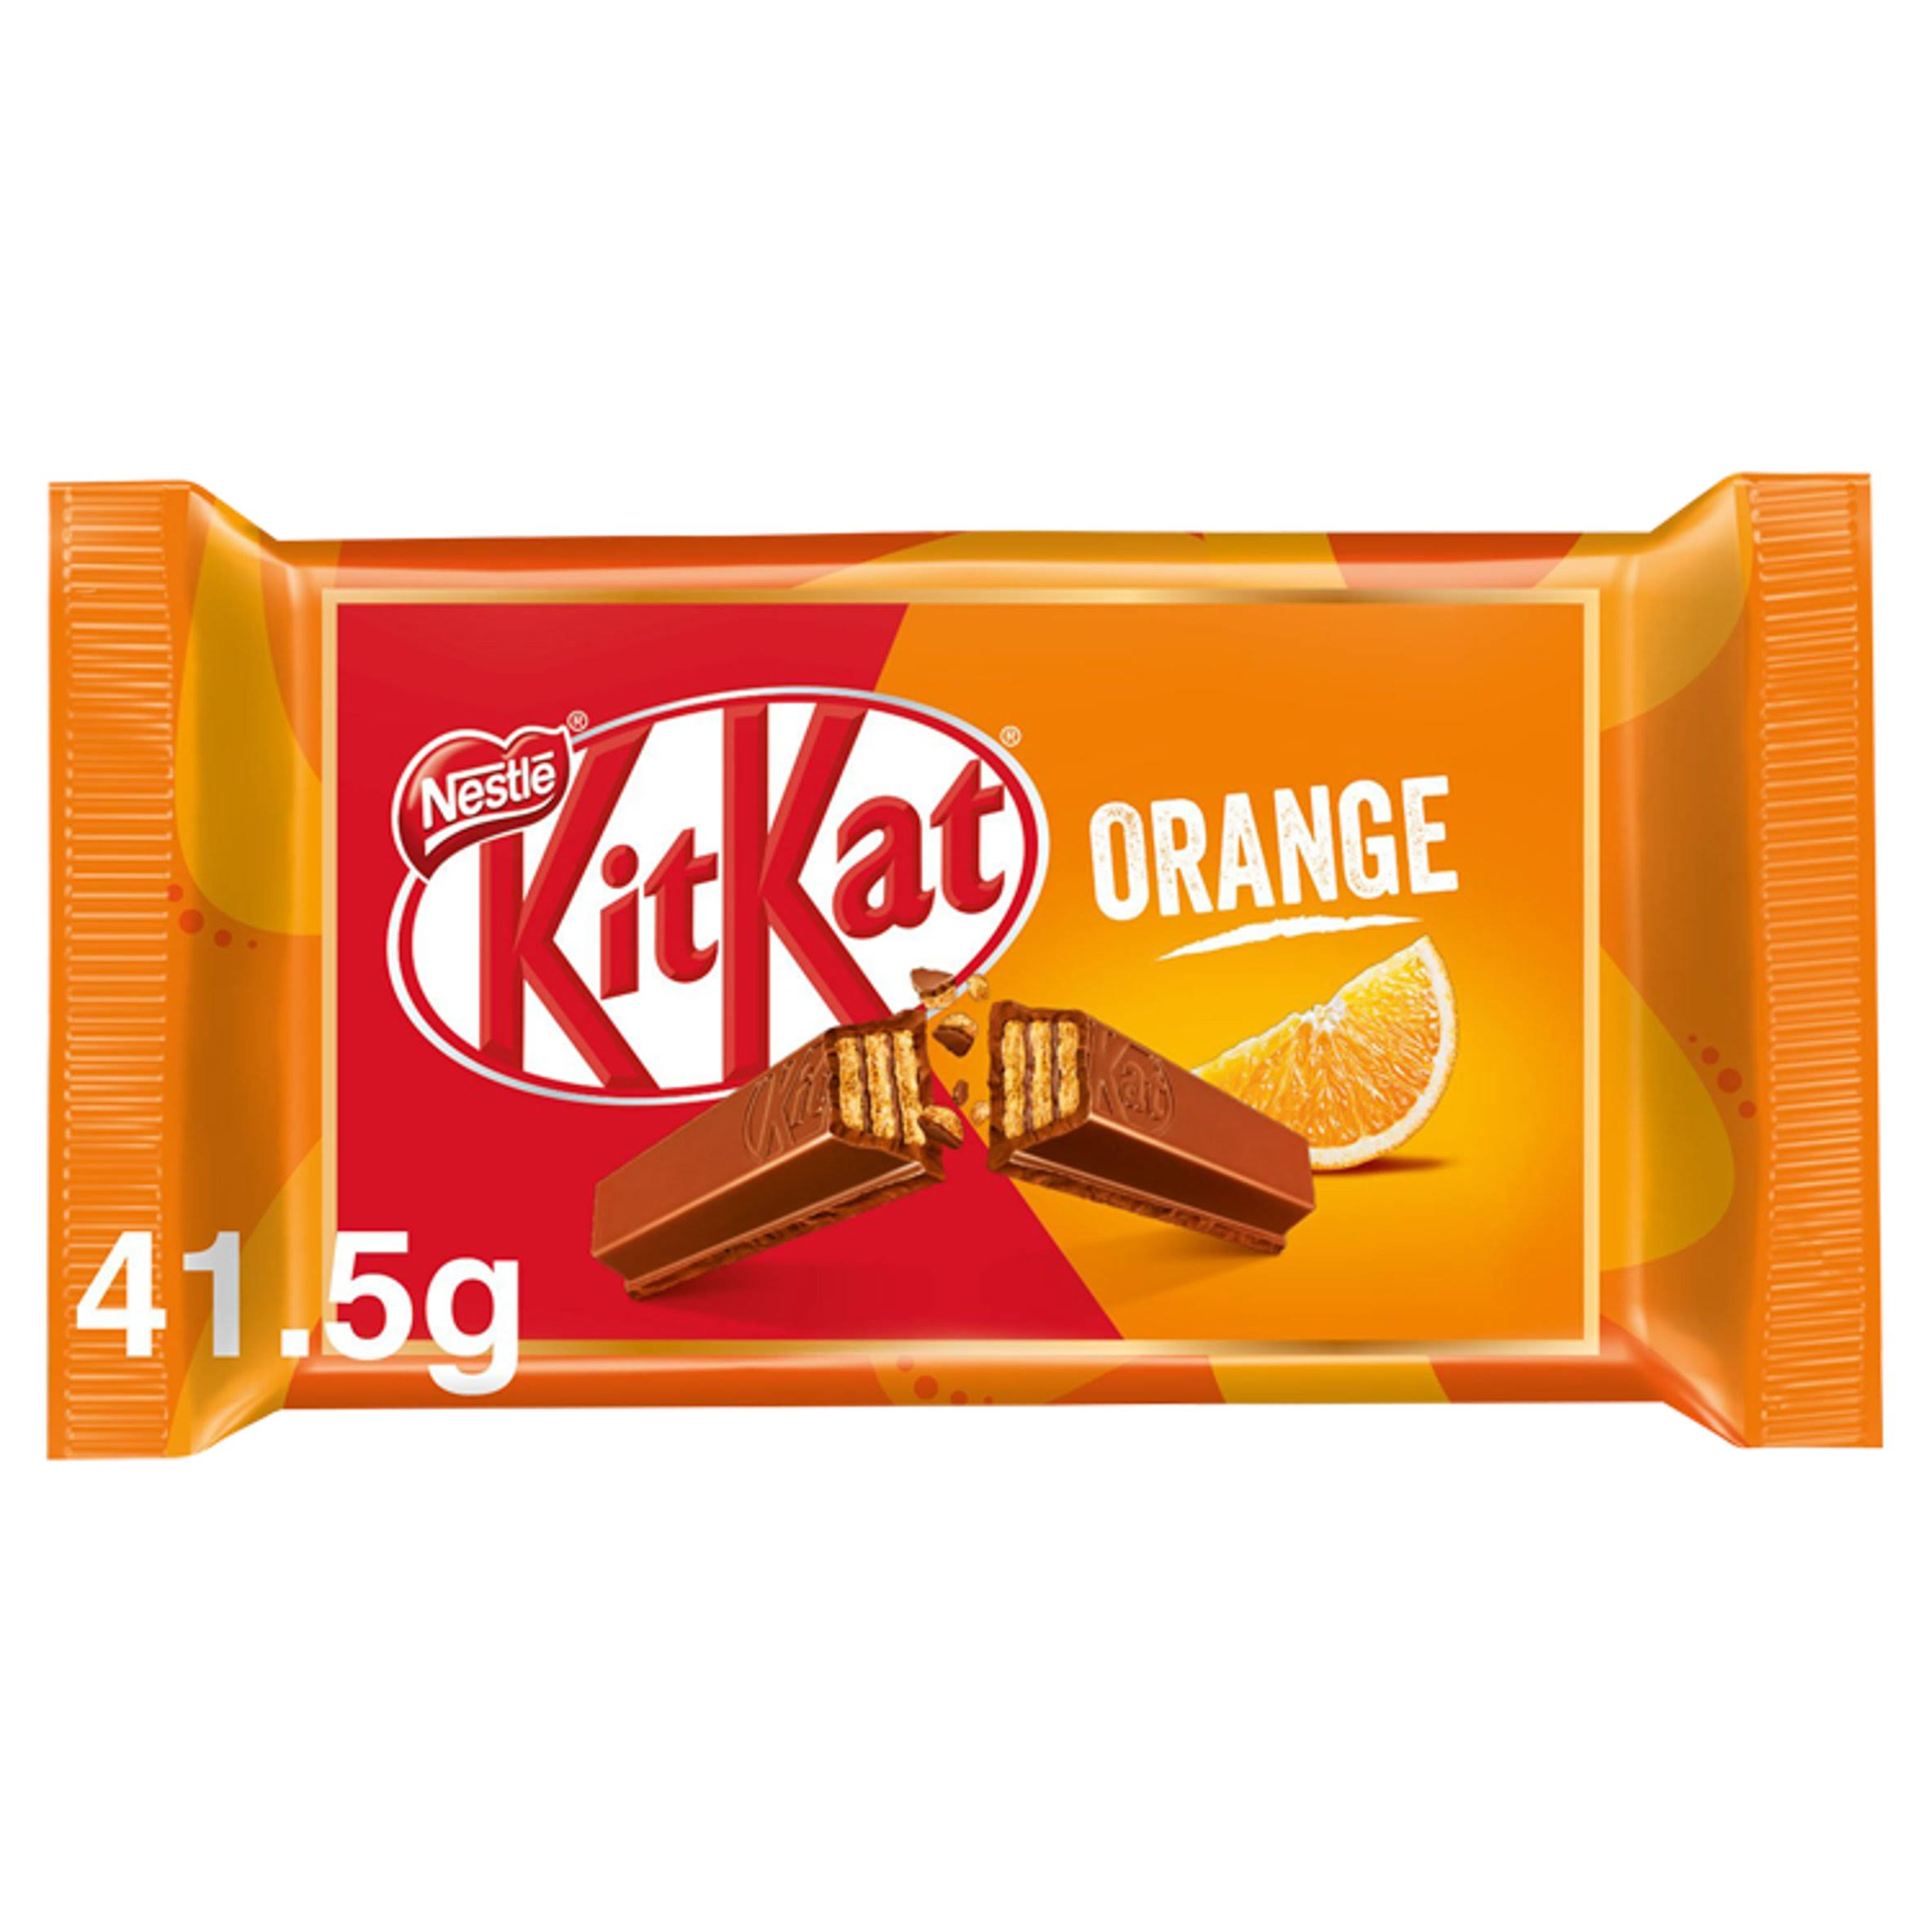 Kit Kat 4 Finger Orange Chocolate Bar | Exoticers